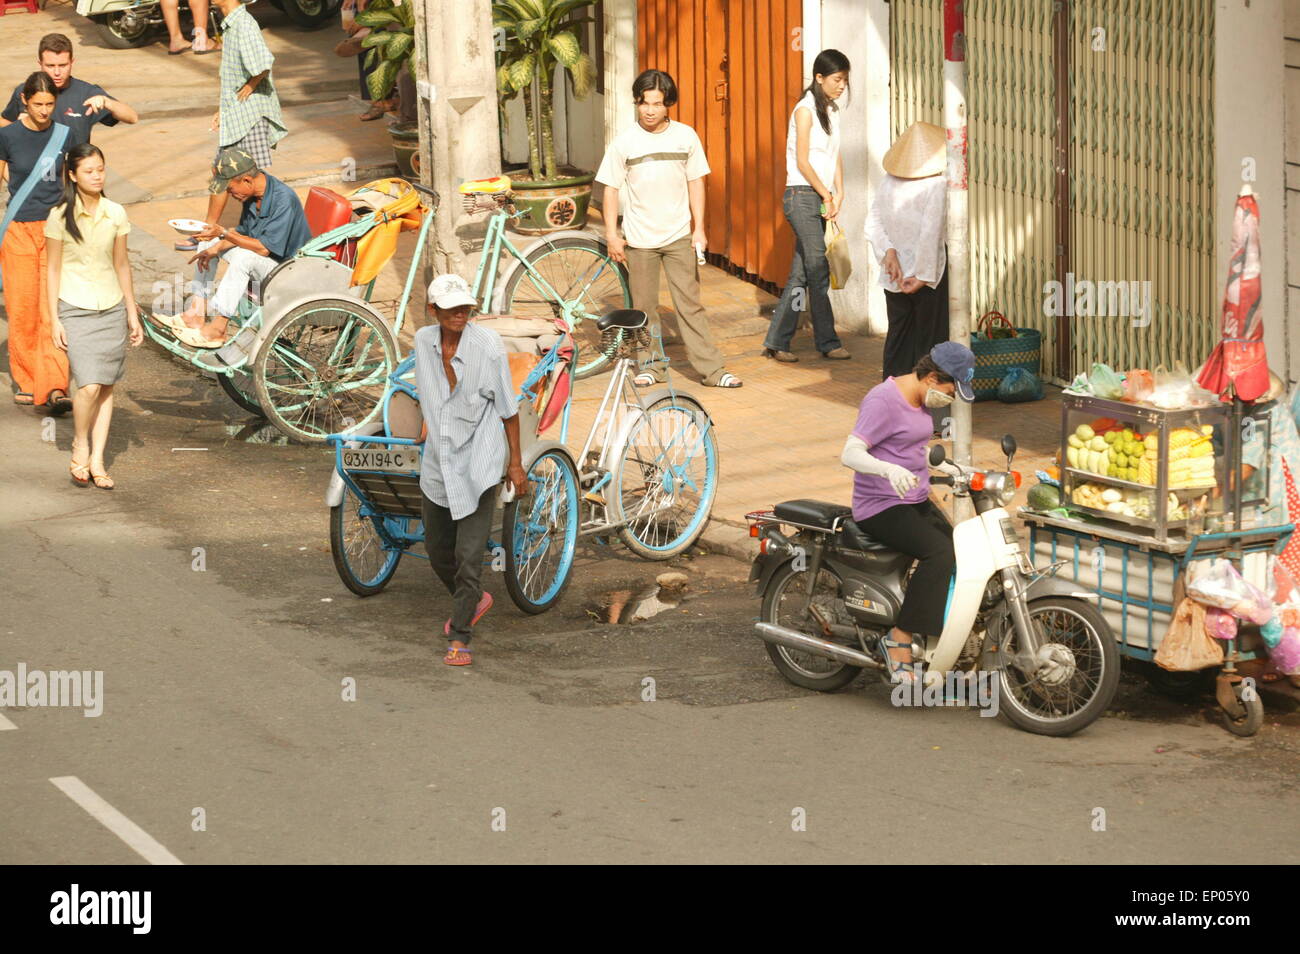 Everyday scene in the city of Hanoi in Vietnam Stock Photo